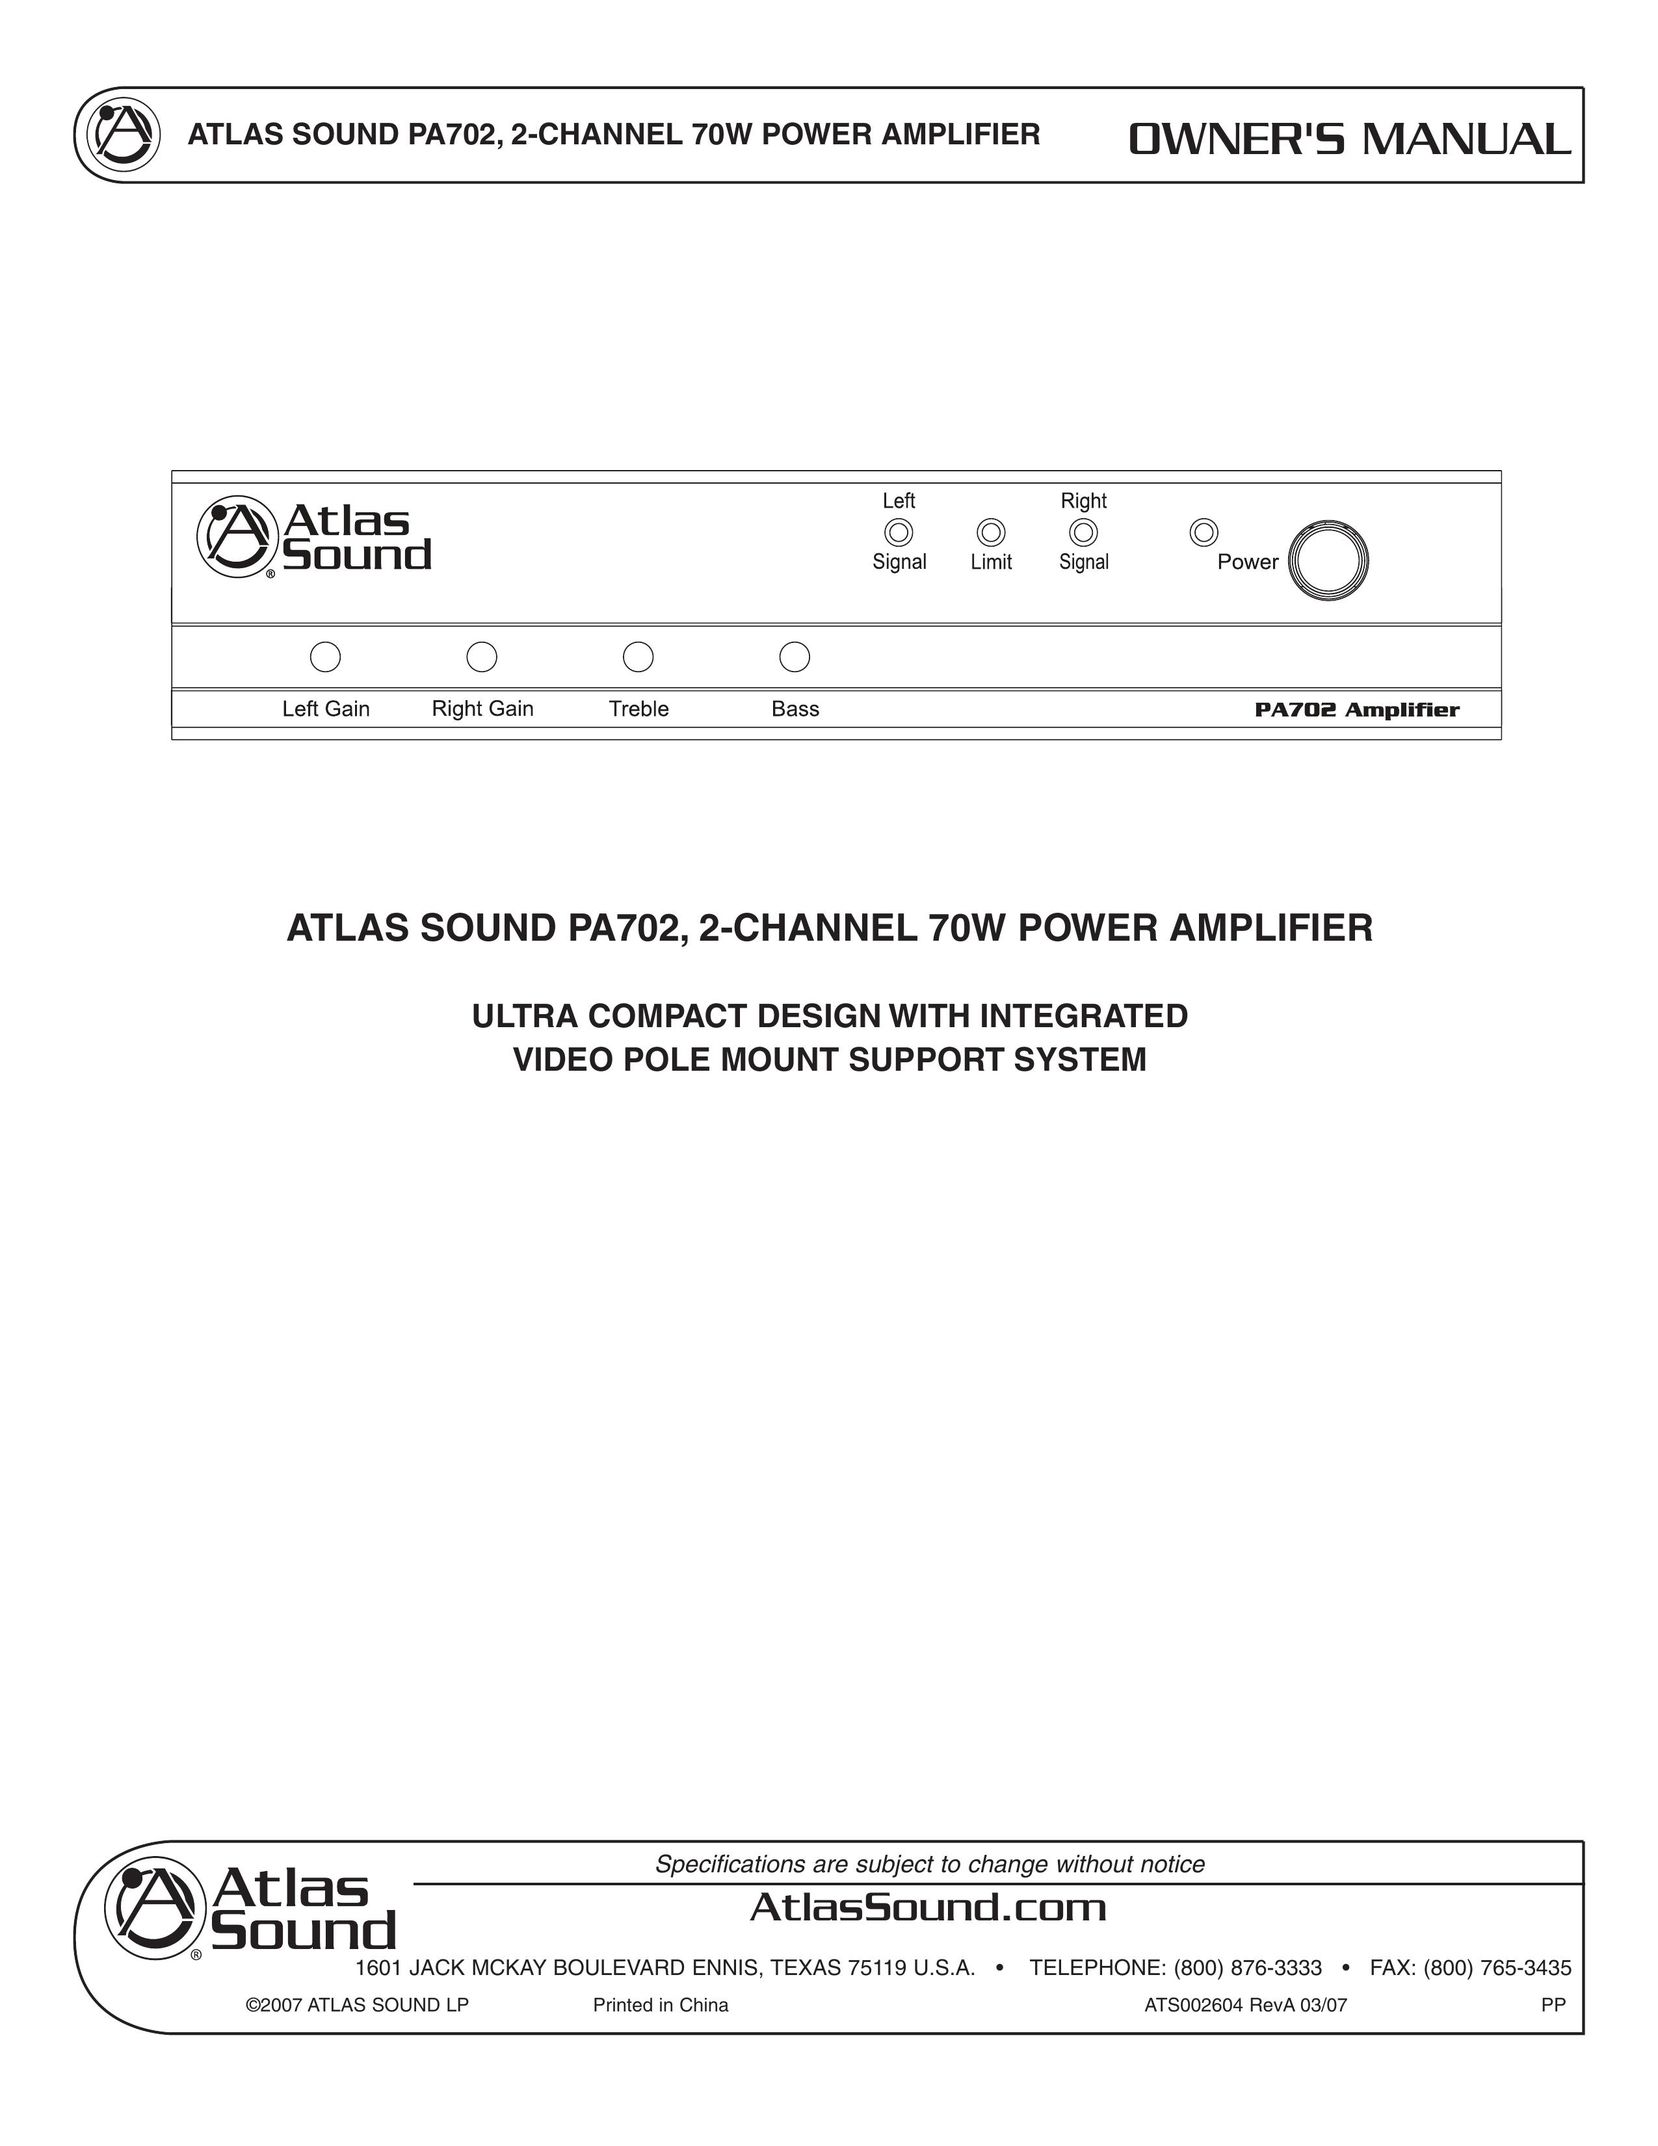 Atlas Sound PA702 Stereo Amplifier User Manual